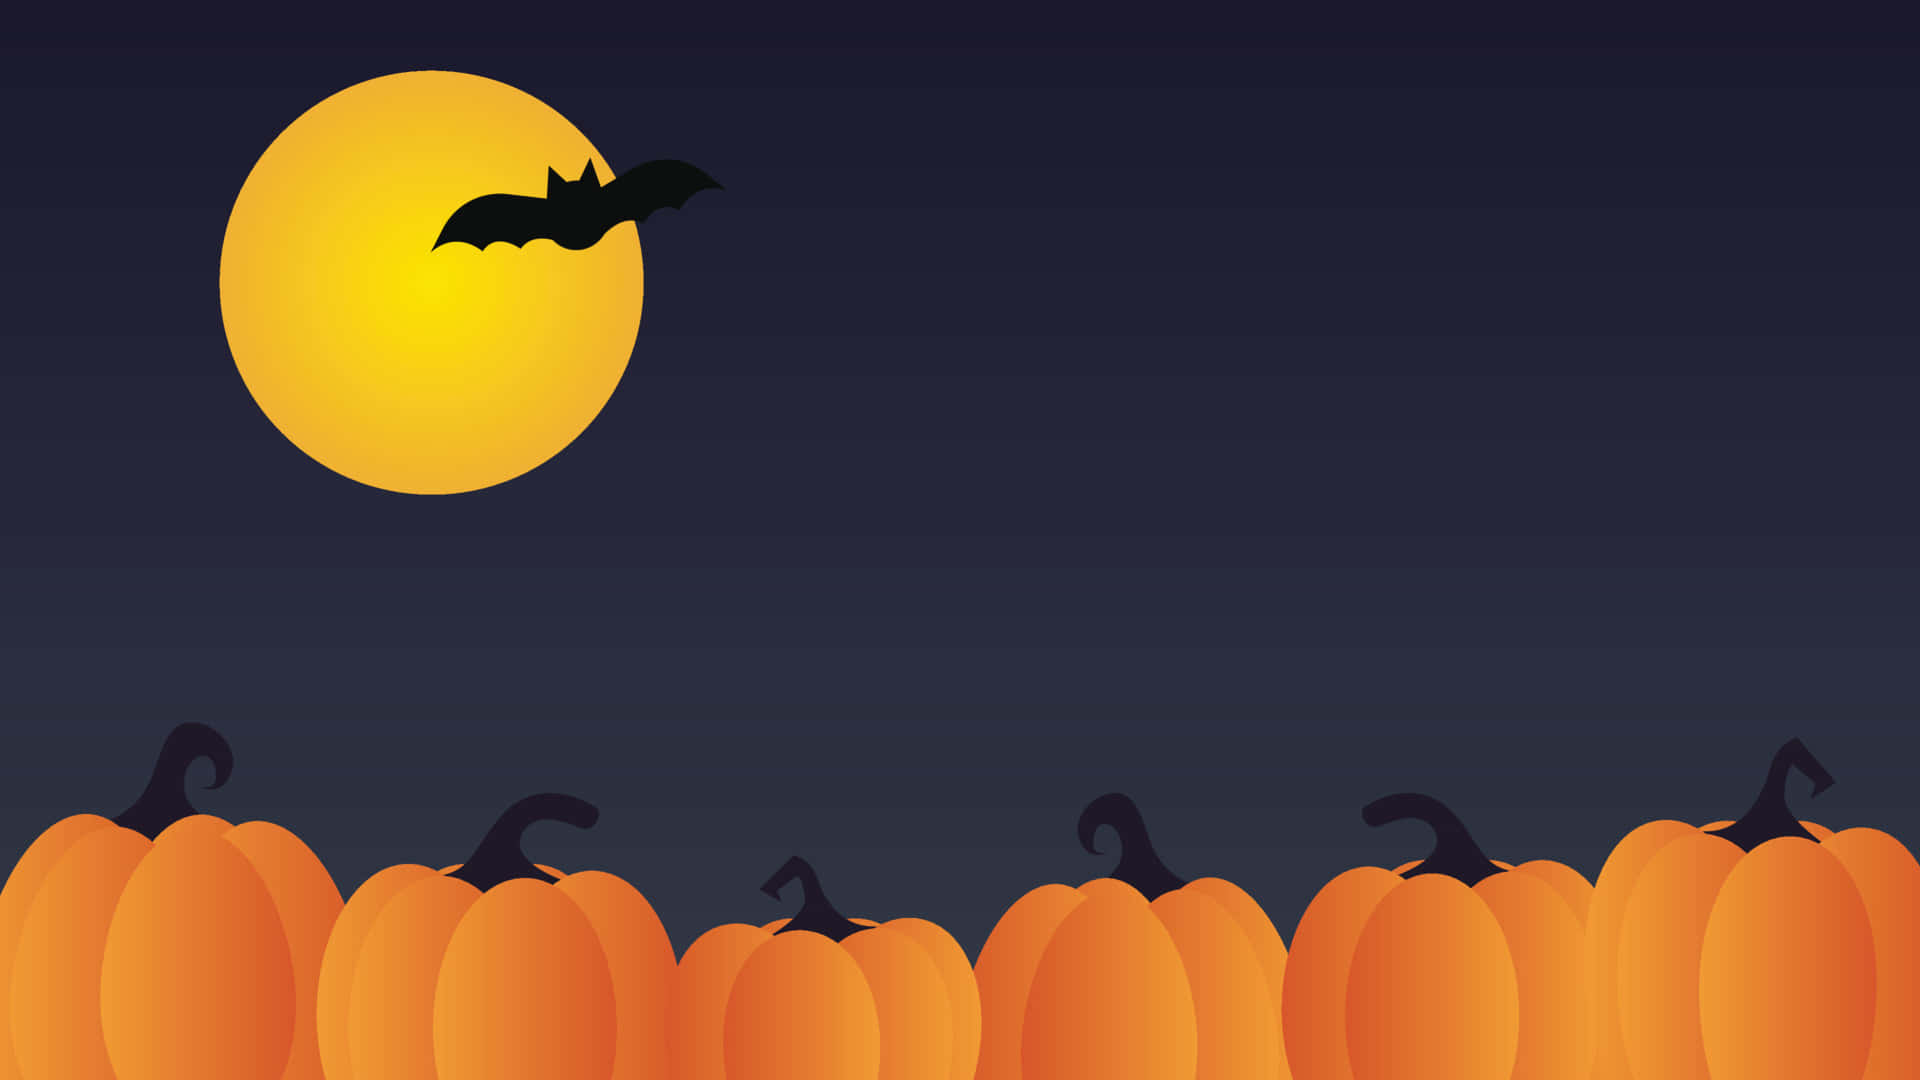 Download halloween pumpkins with bats flying over them | Wallpapers.com